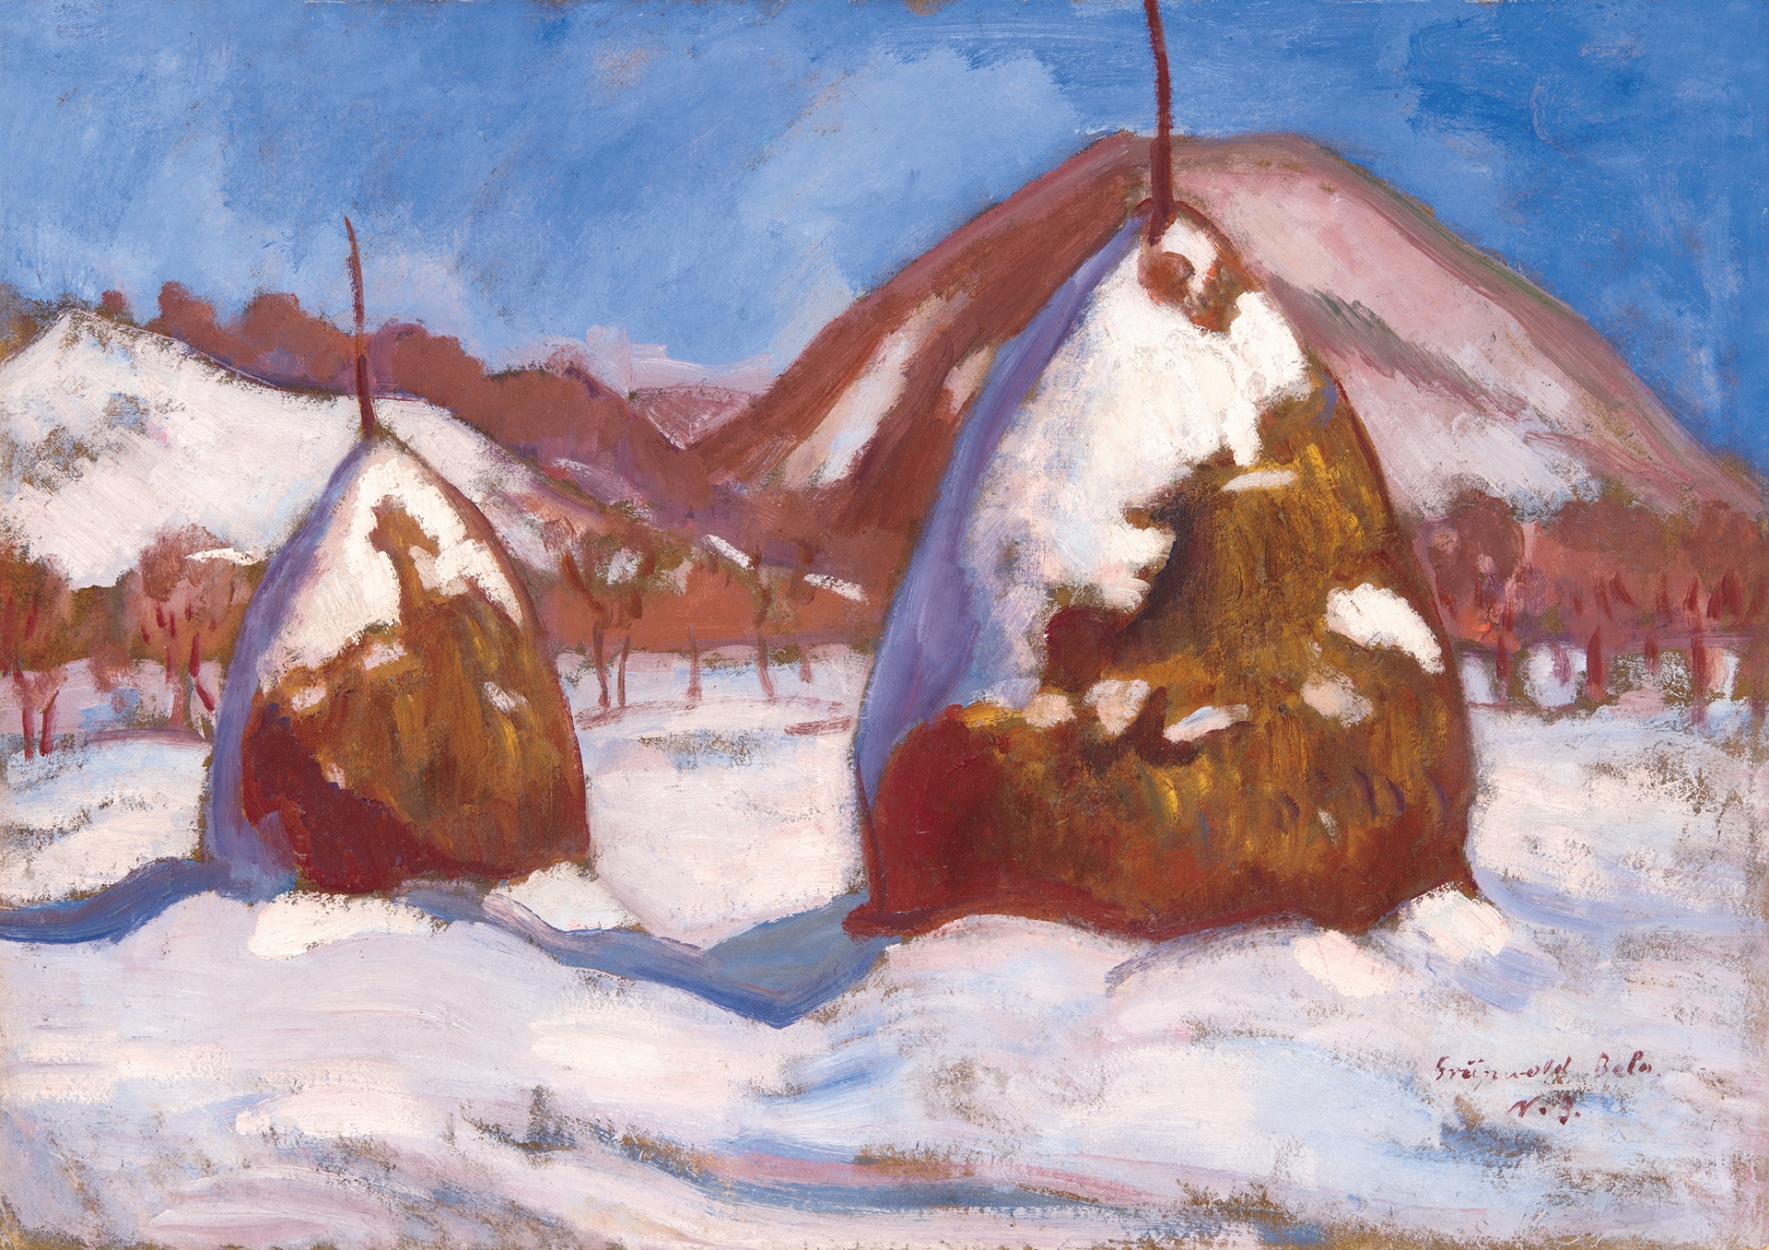 Iványi Grünwald Béla (1867-1940) Snowy Stacks